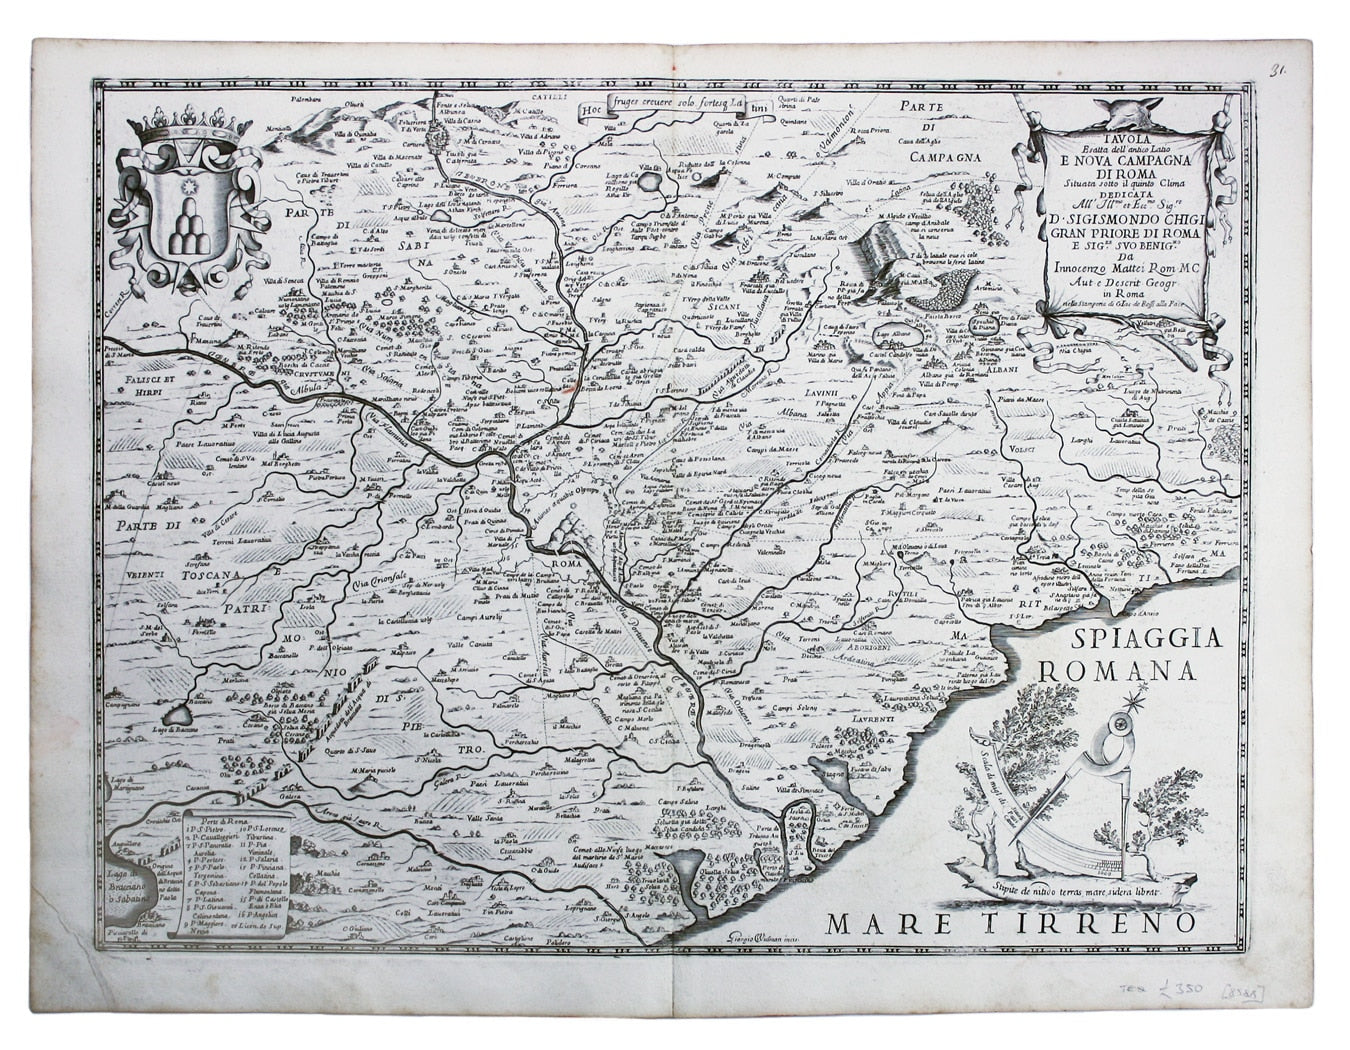 De Rossi’s Map of Campagna Romana